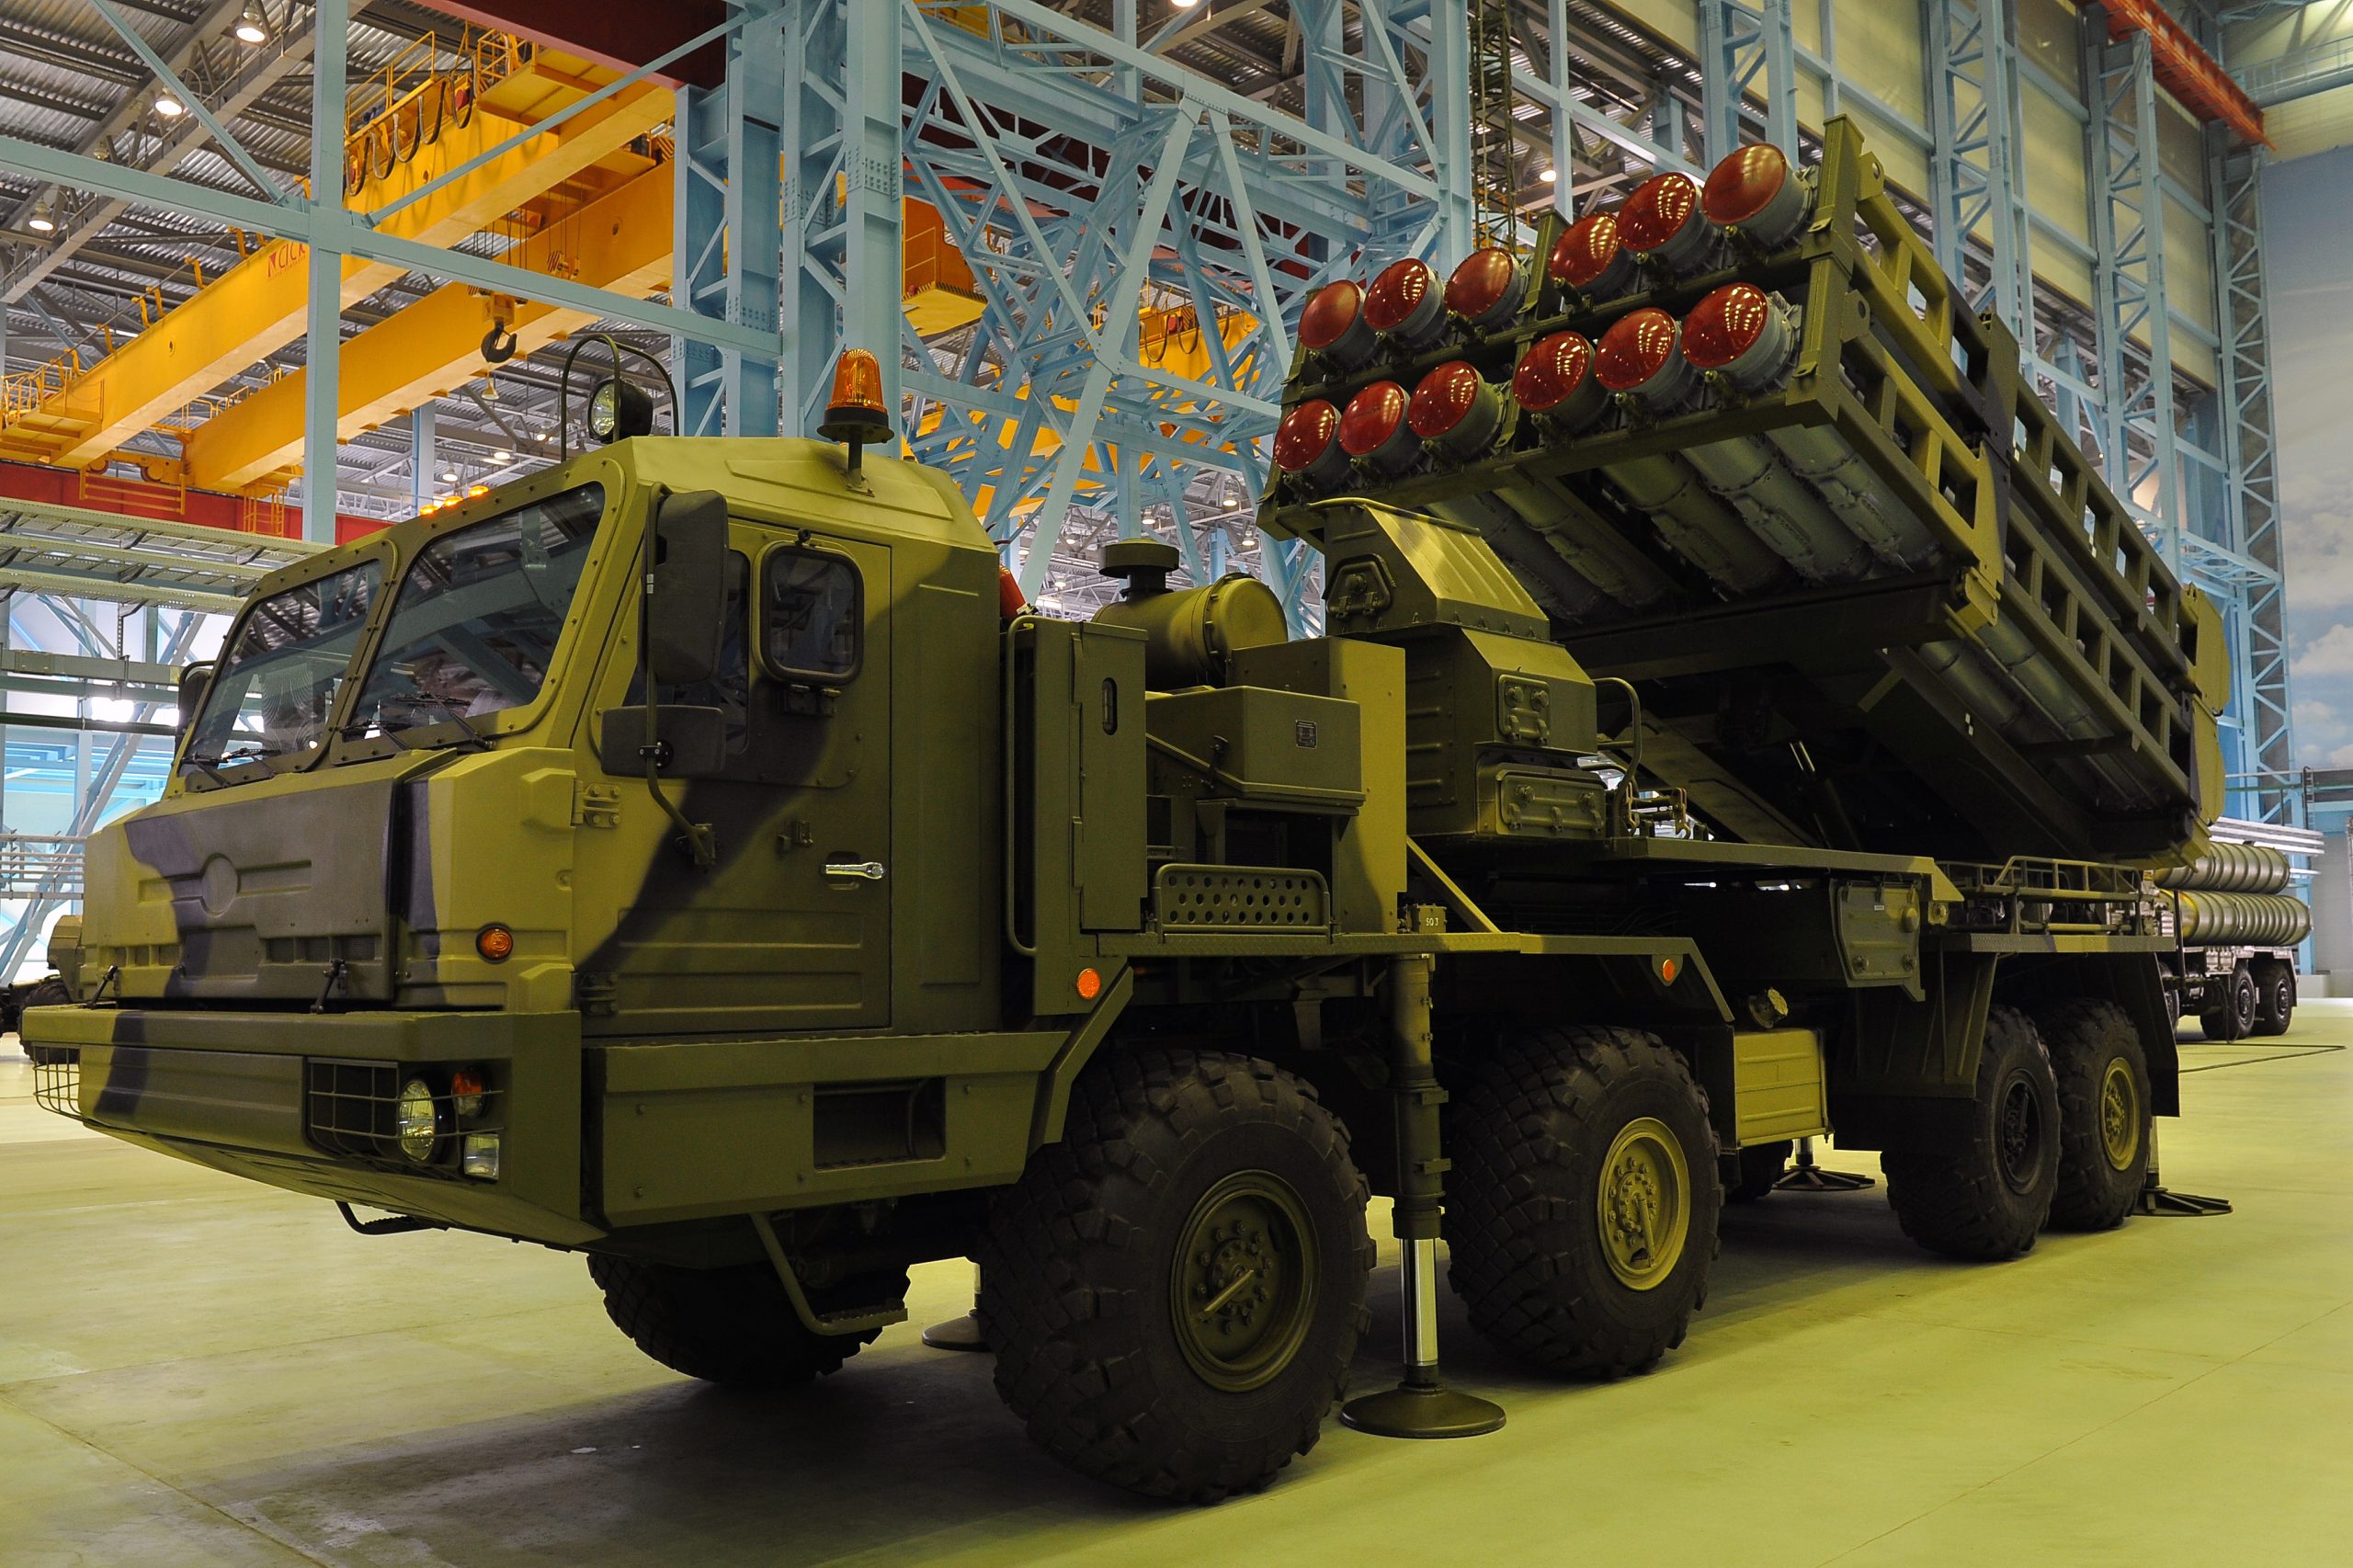 S-350 Vityaz: Αυτό είναι το νέο αντιαεροπορικό πυραυλικό σύστημα της Ρωσίας